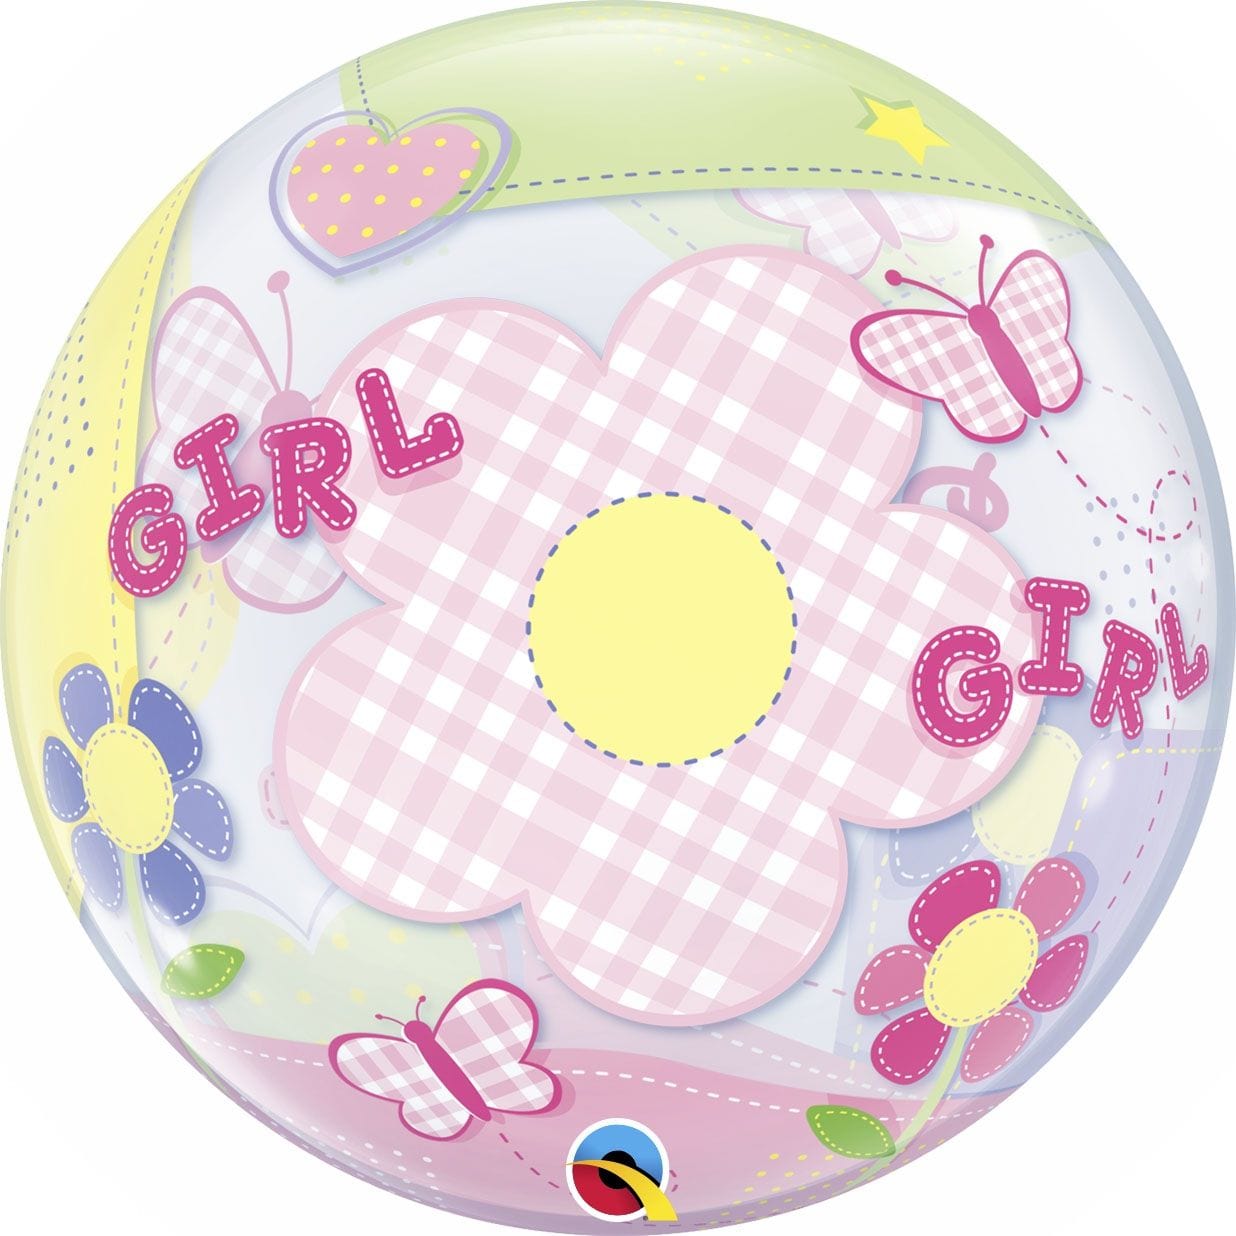 Baby Girl Butterflies Bubble Balloons